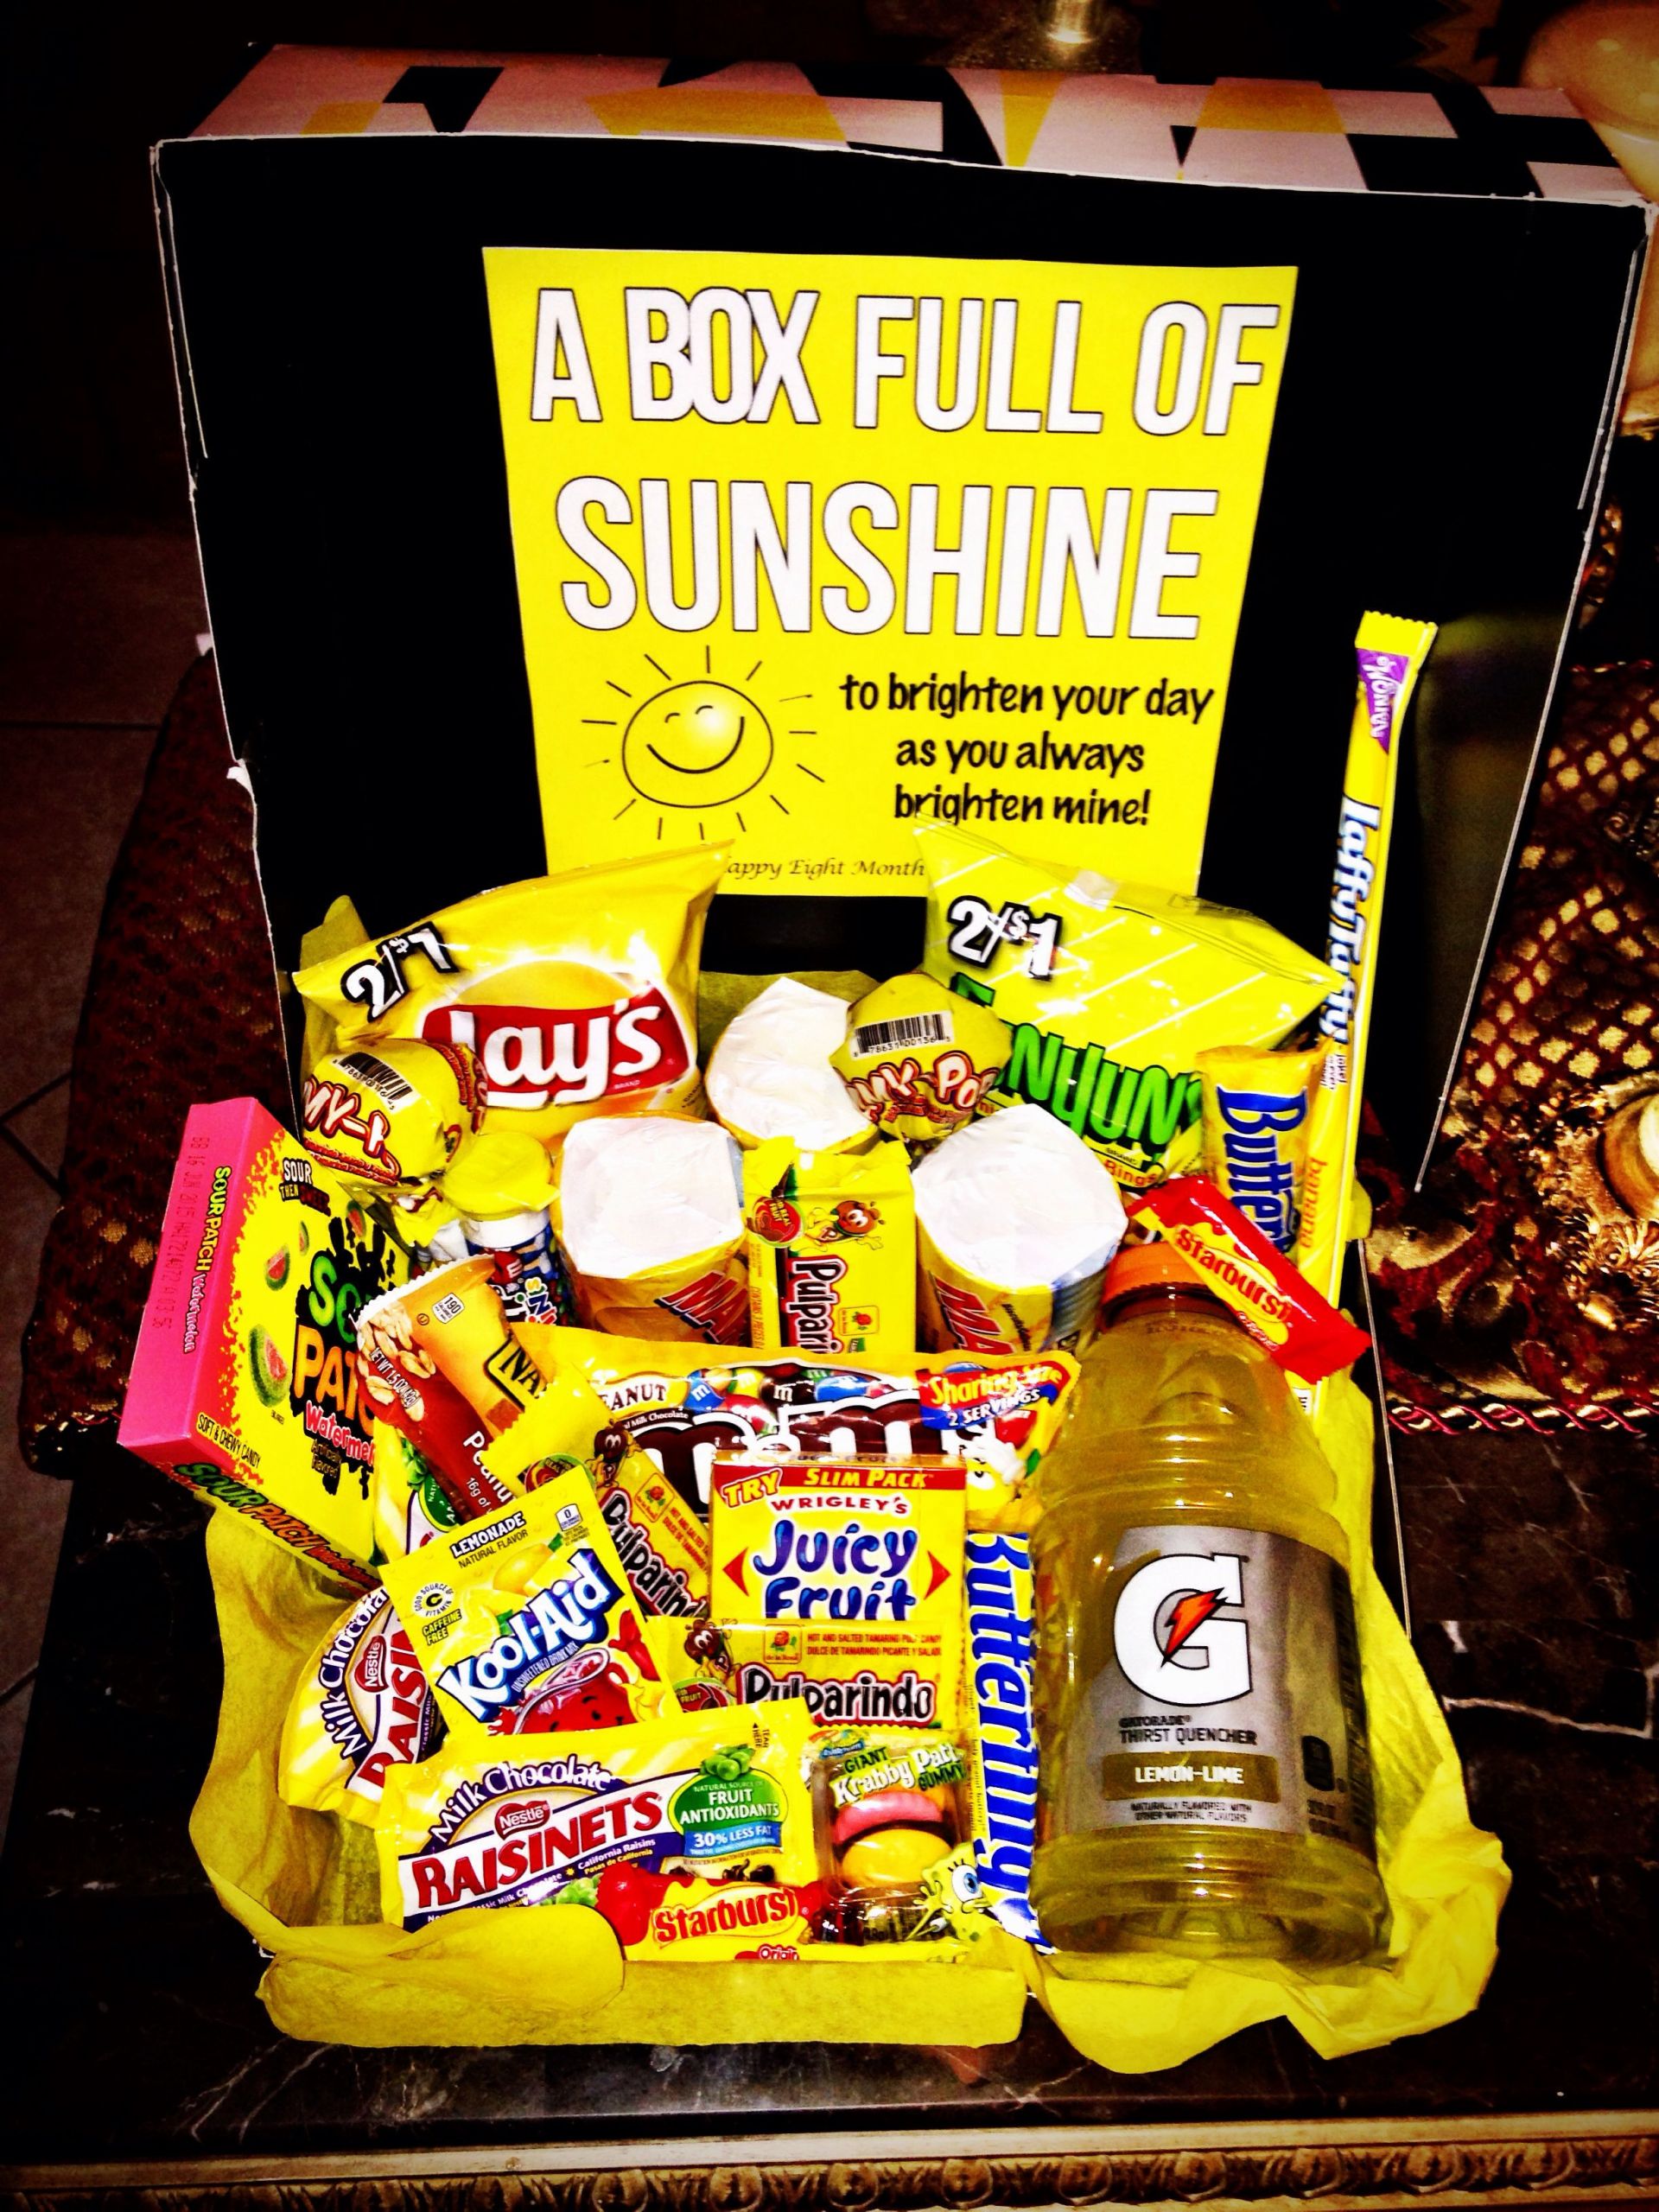 Gift Box Ideas For Boyfriend
 "Box Full Sunshine" Gift For The Boyfriend